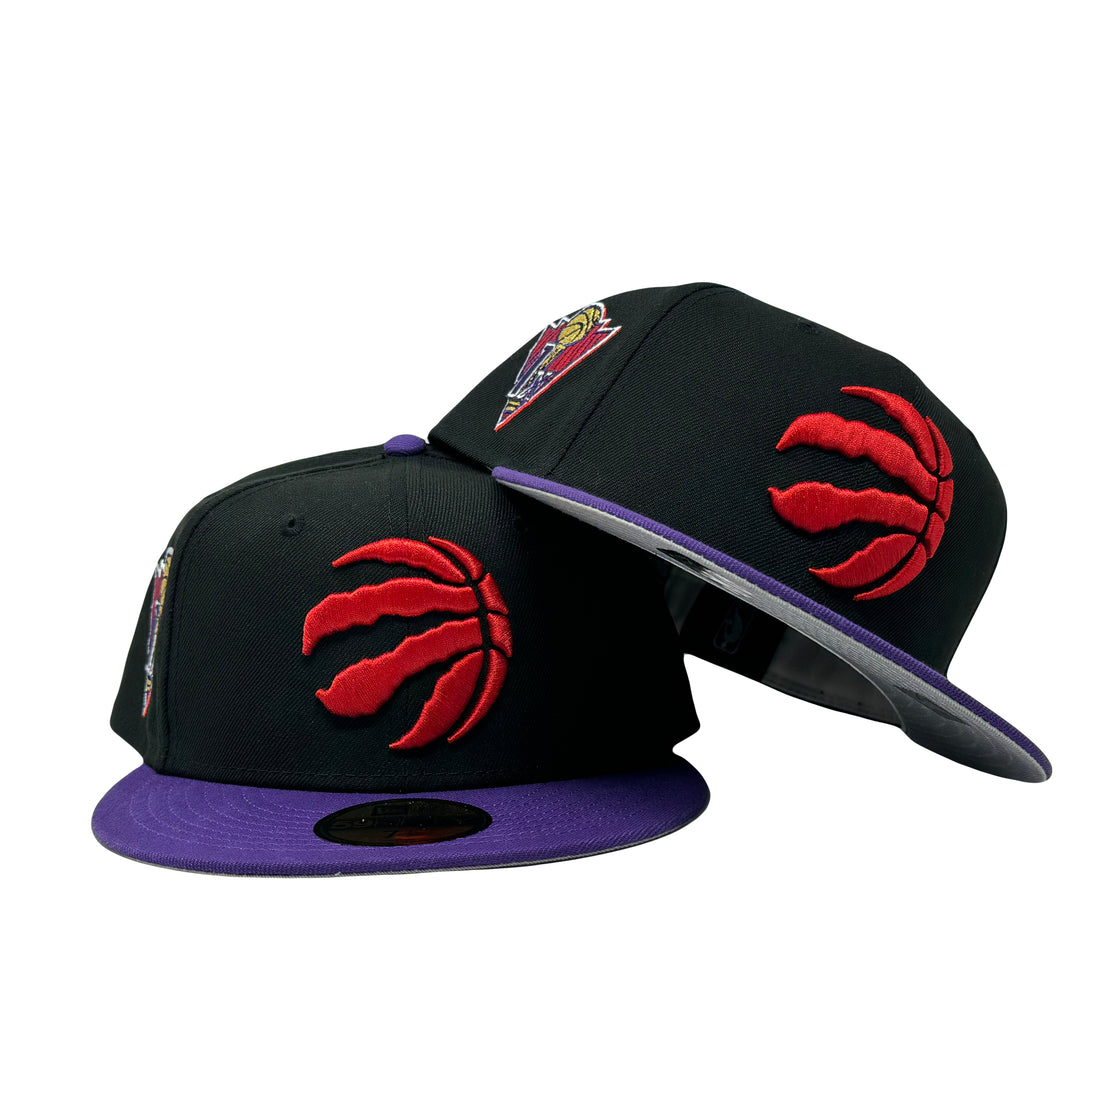 Toronto Raptors 1X NBA Champions 5950 New Era Fitted Hat Black